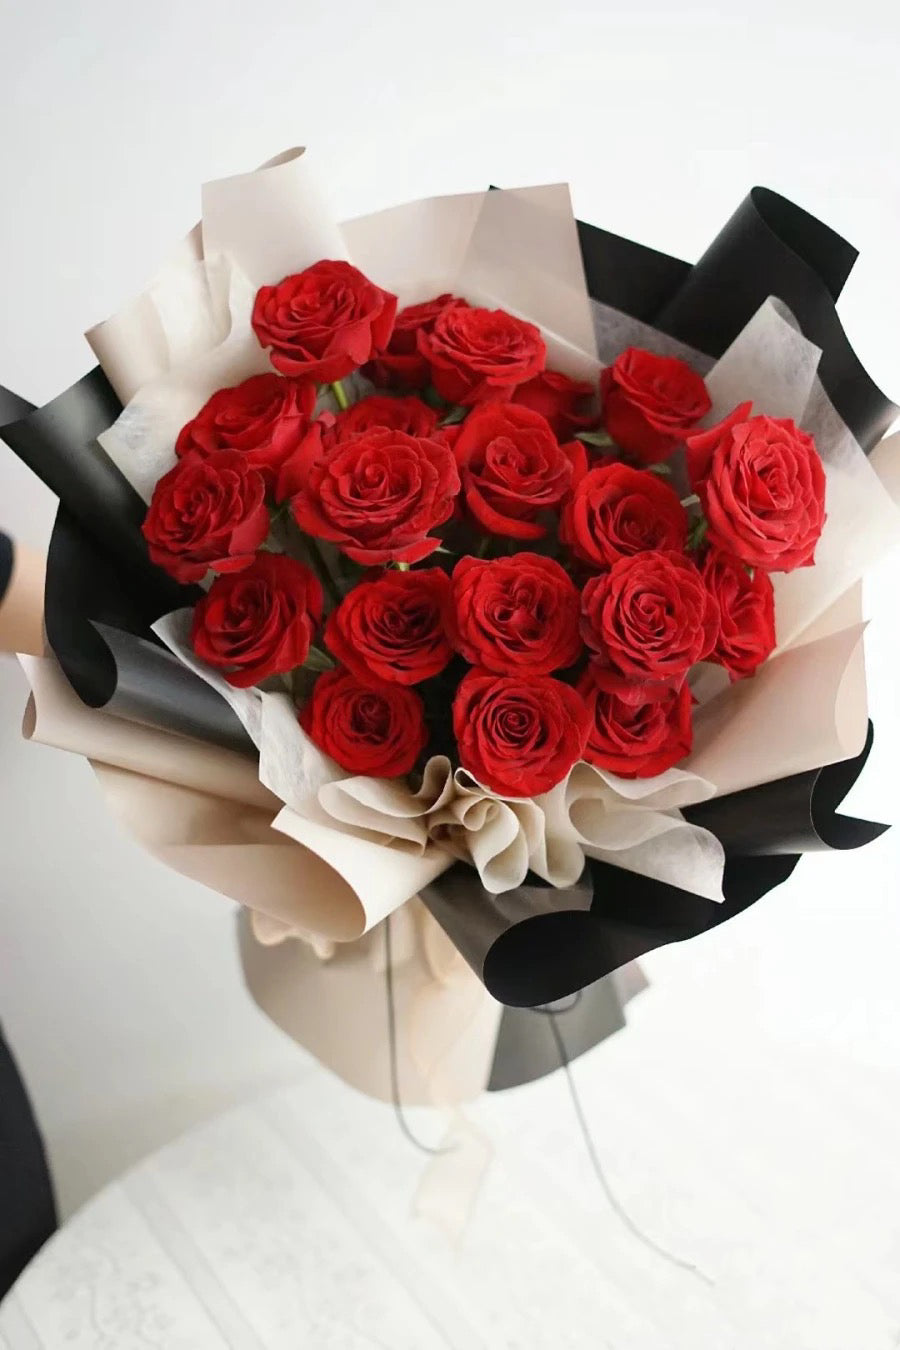 [FRESH FLOWER] Red Rose Bouquet